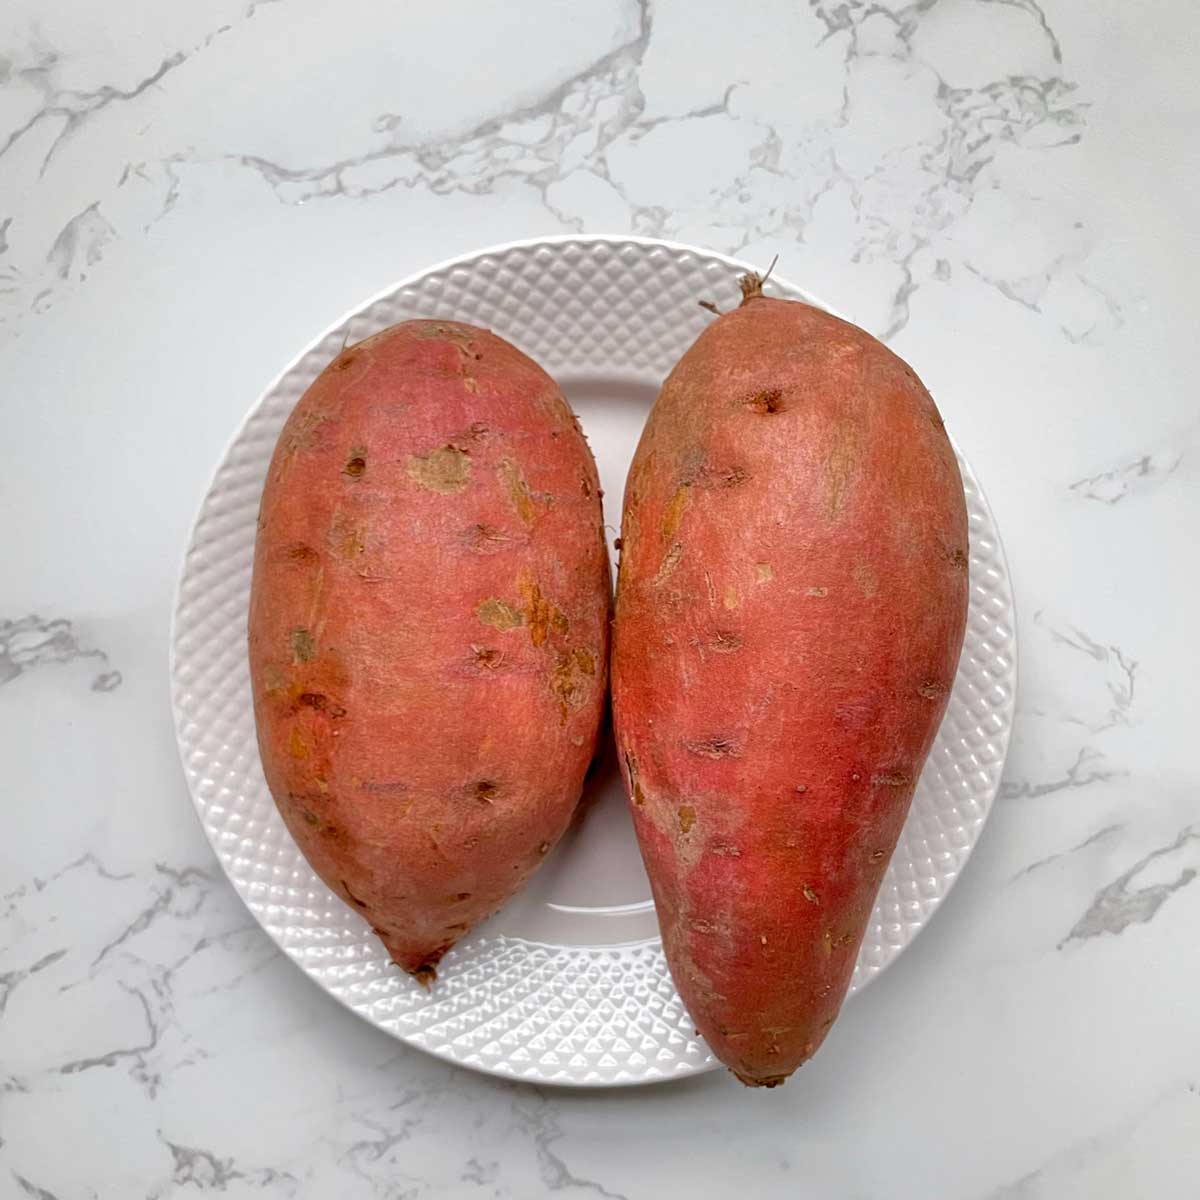 Raw whole sweet potato.